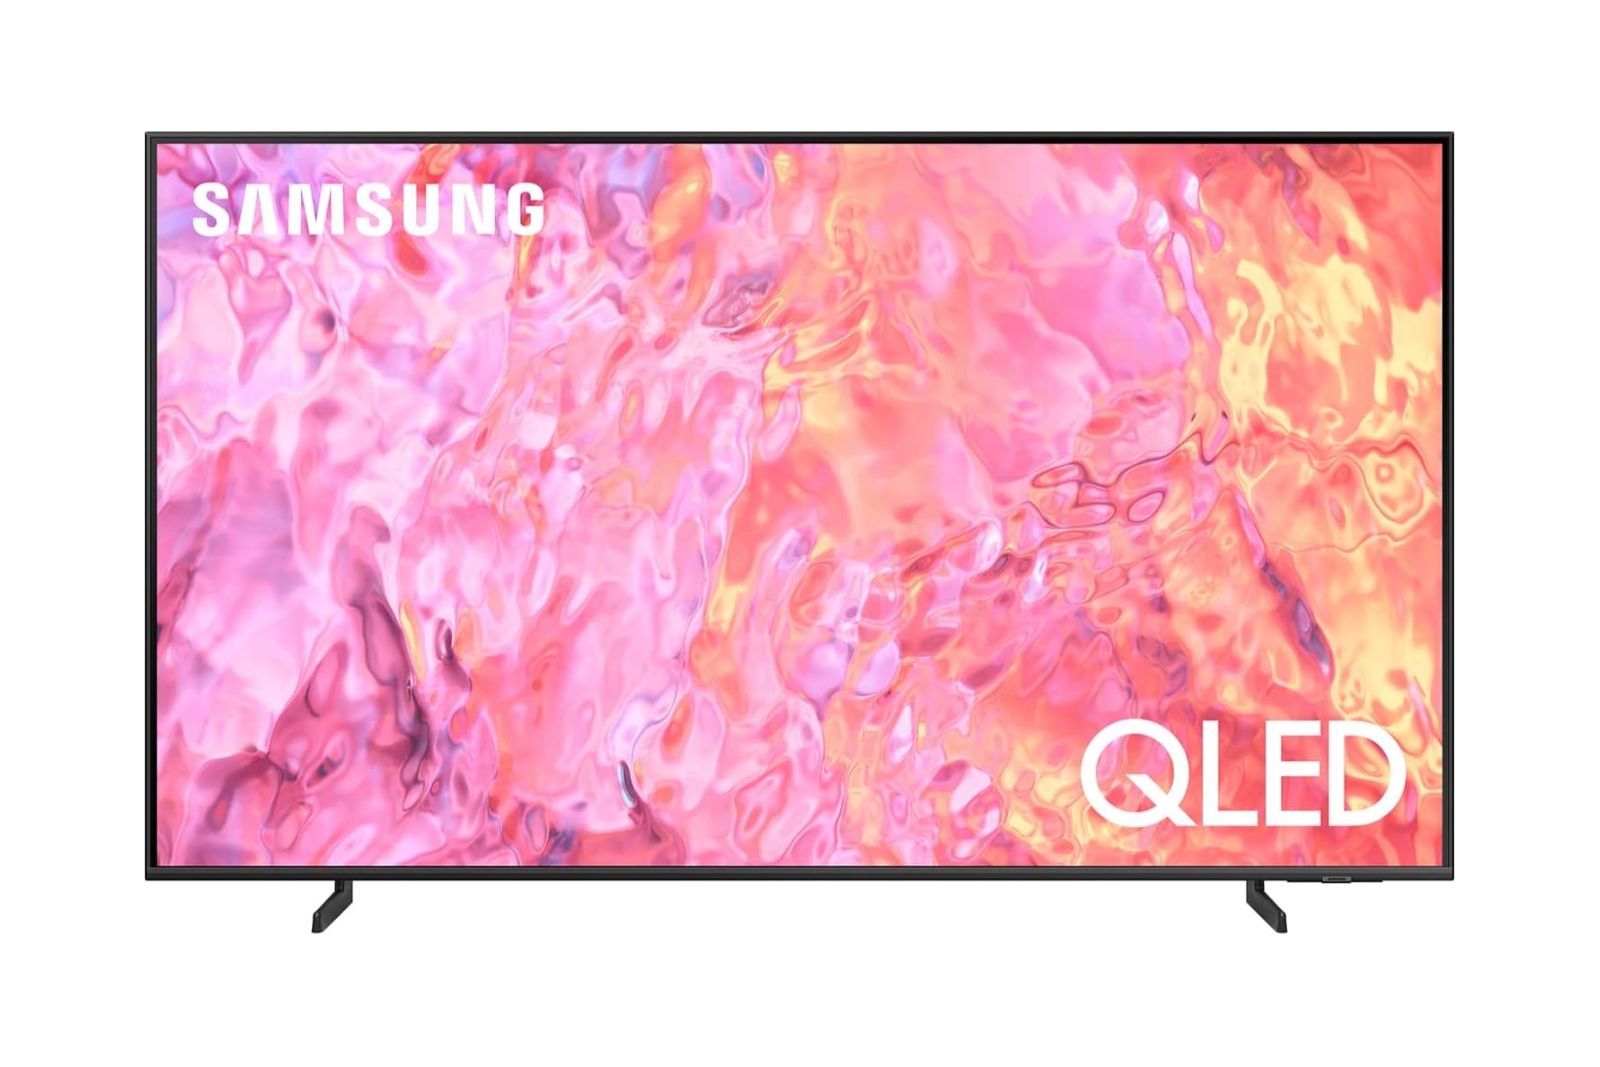 A small flatscreen Samsung TV on a white background.